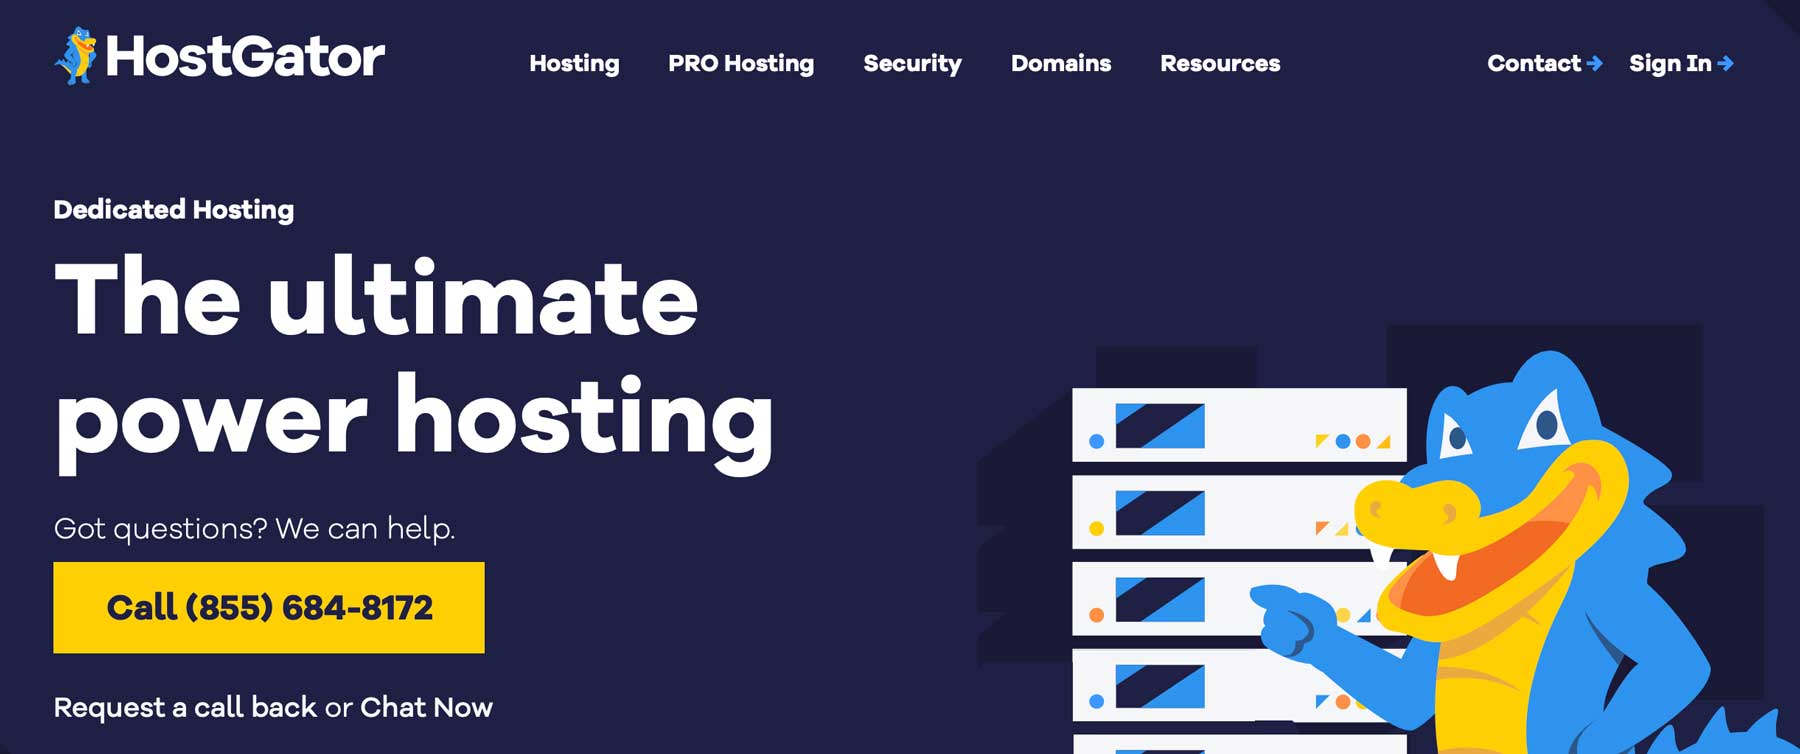 HostGator hosting